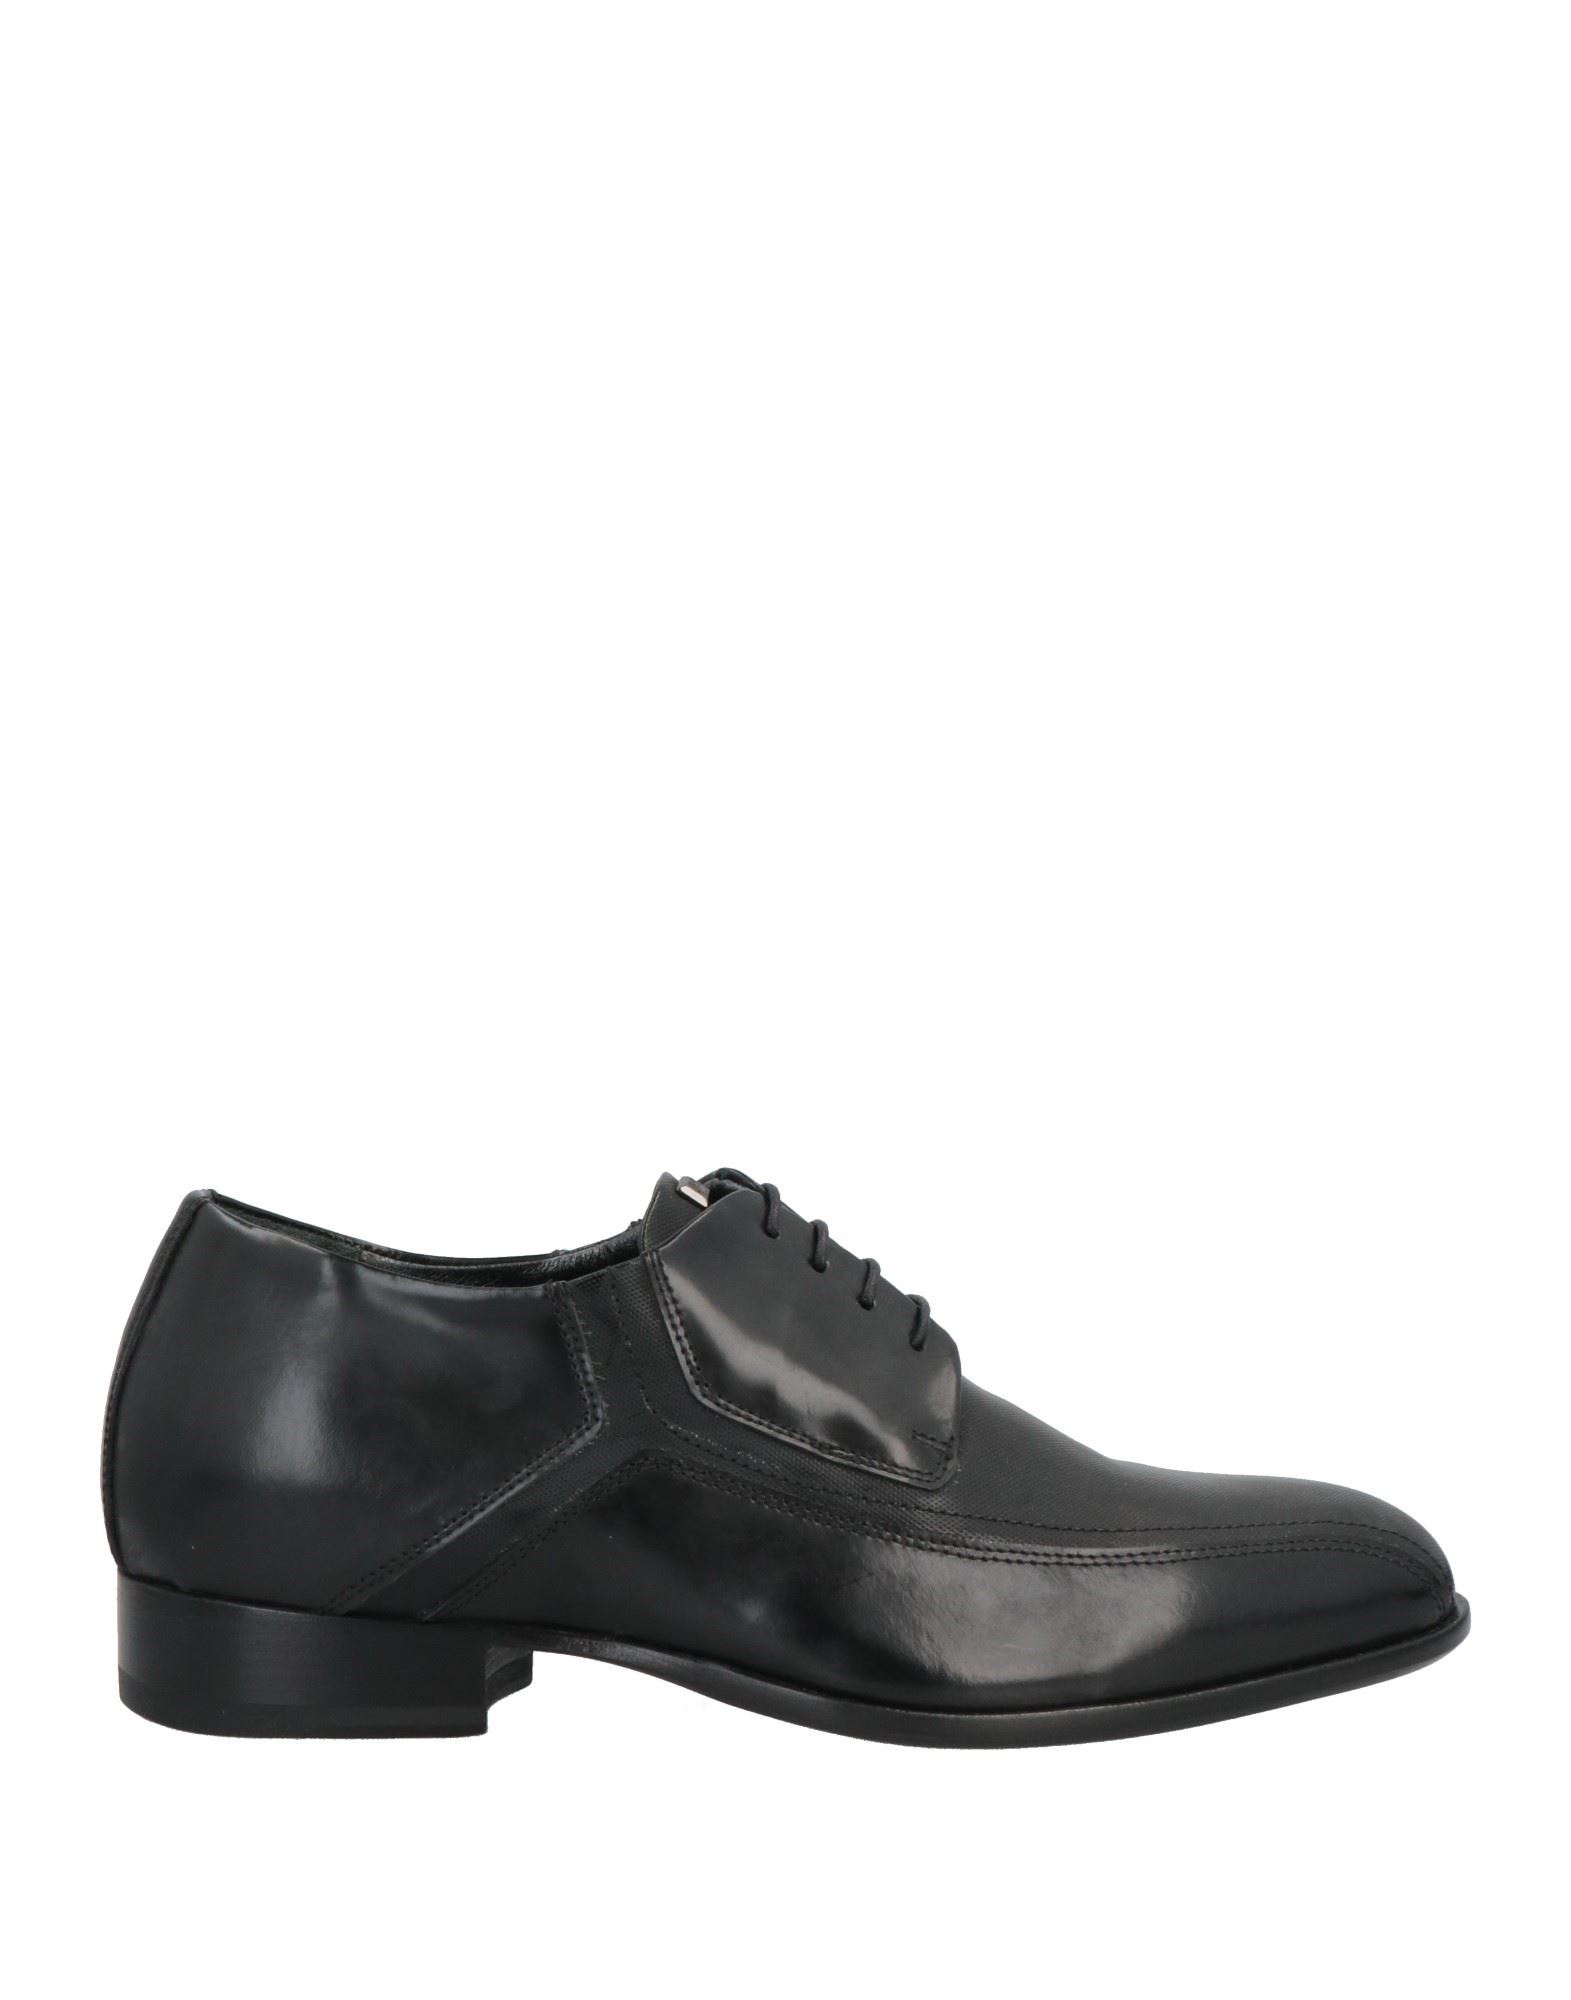 CARLO PIGNATELLI Shoes for Men | ModeSens